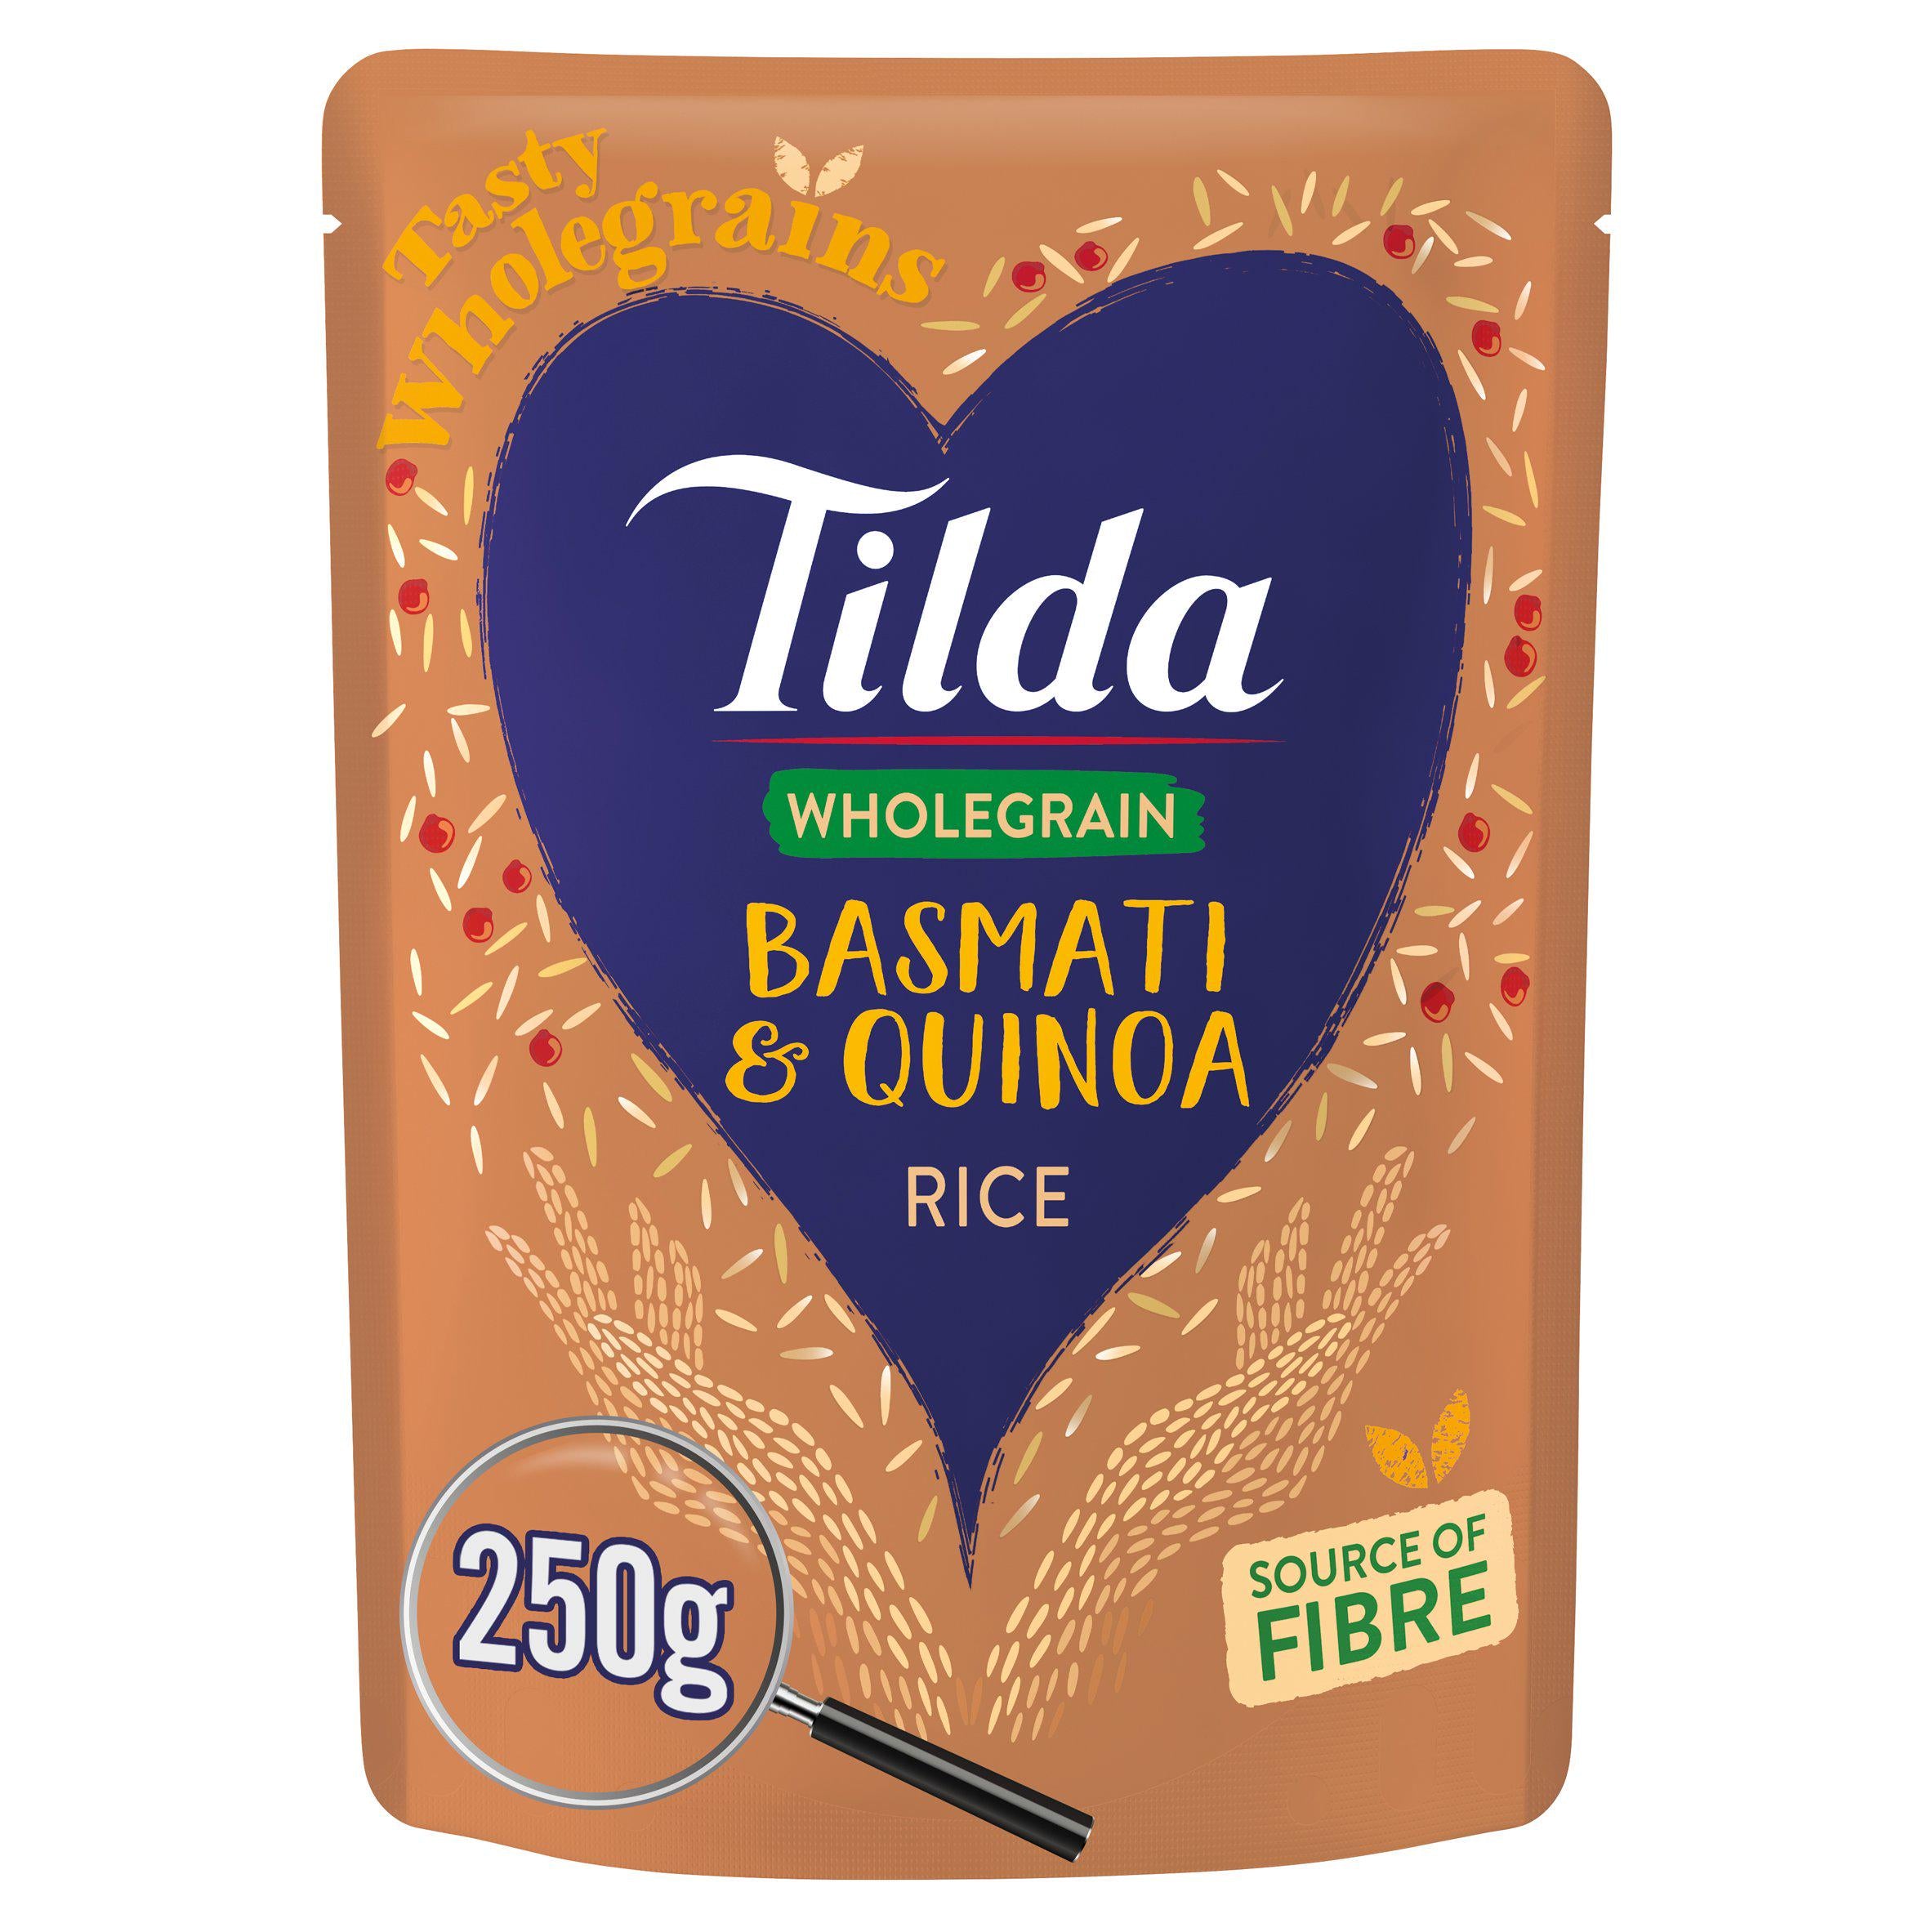 Tilda Microwave Rice Wholegrain Basmati & Quinoa 250g GOODS Sainsburys   